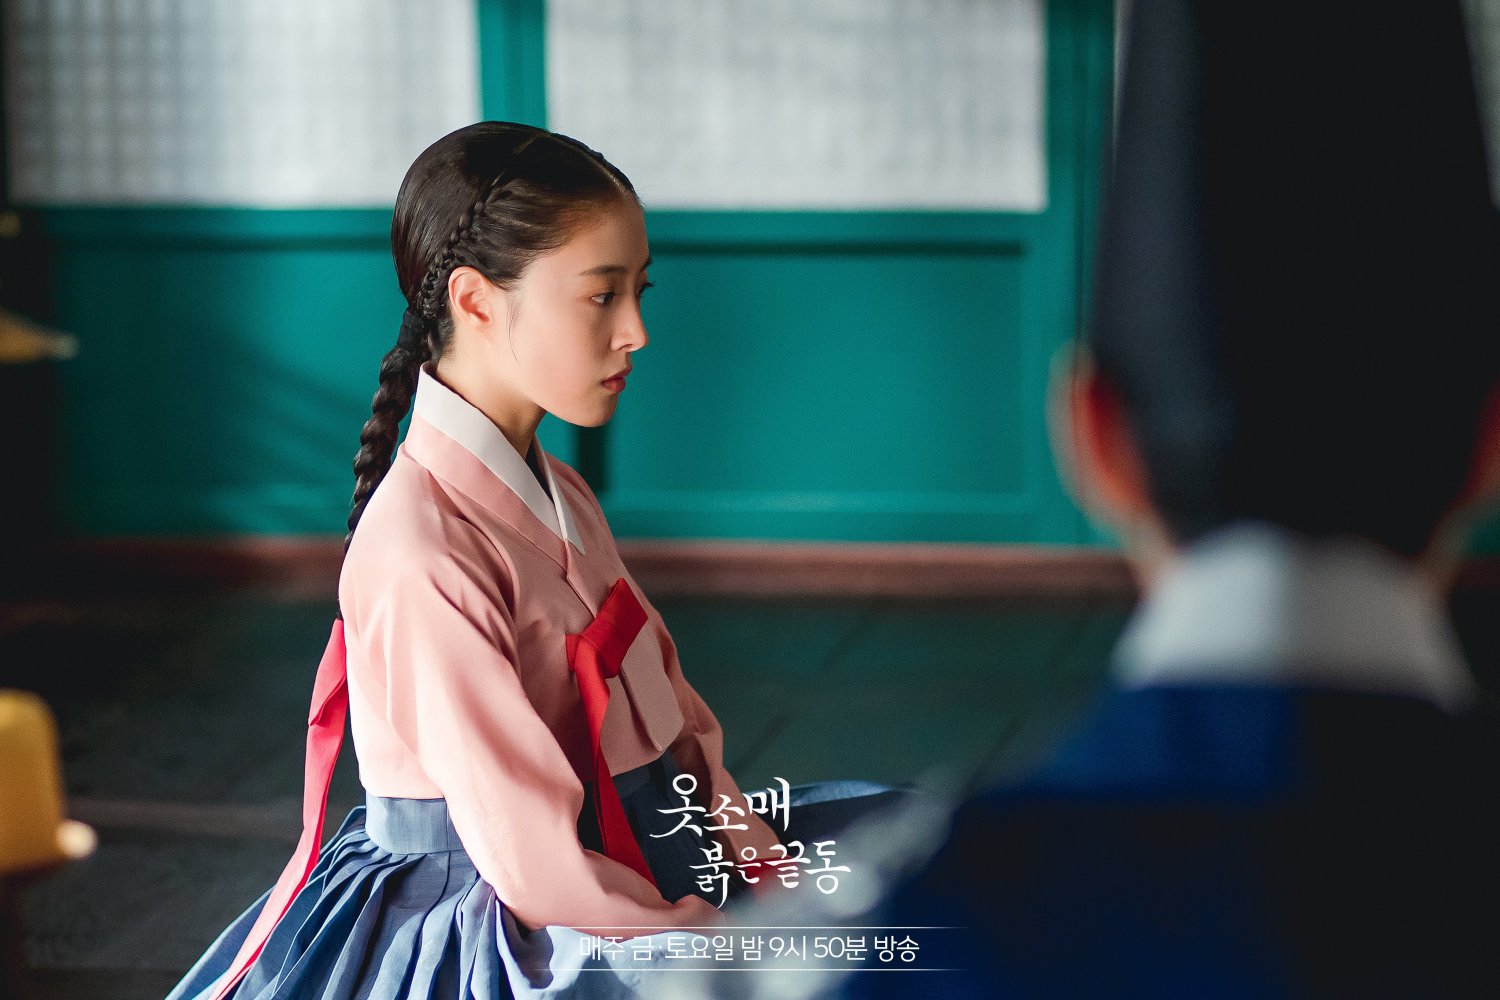 Photos New Stills Added For The Korean Drama The Red Sleeve Hancinema 4156